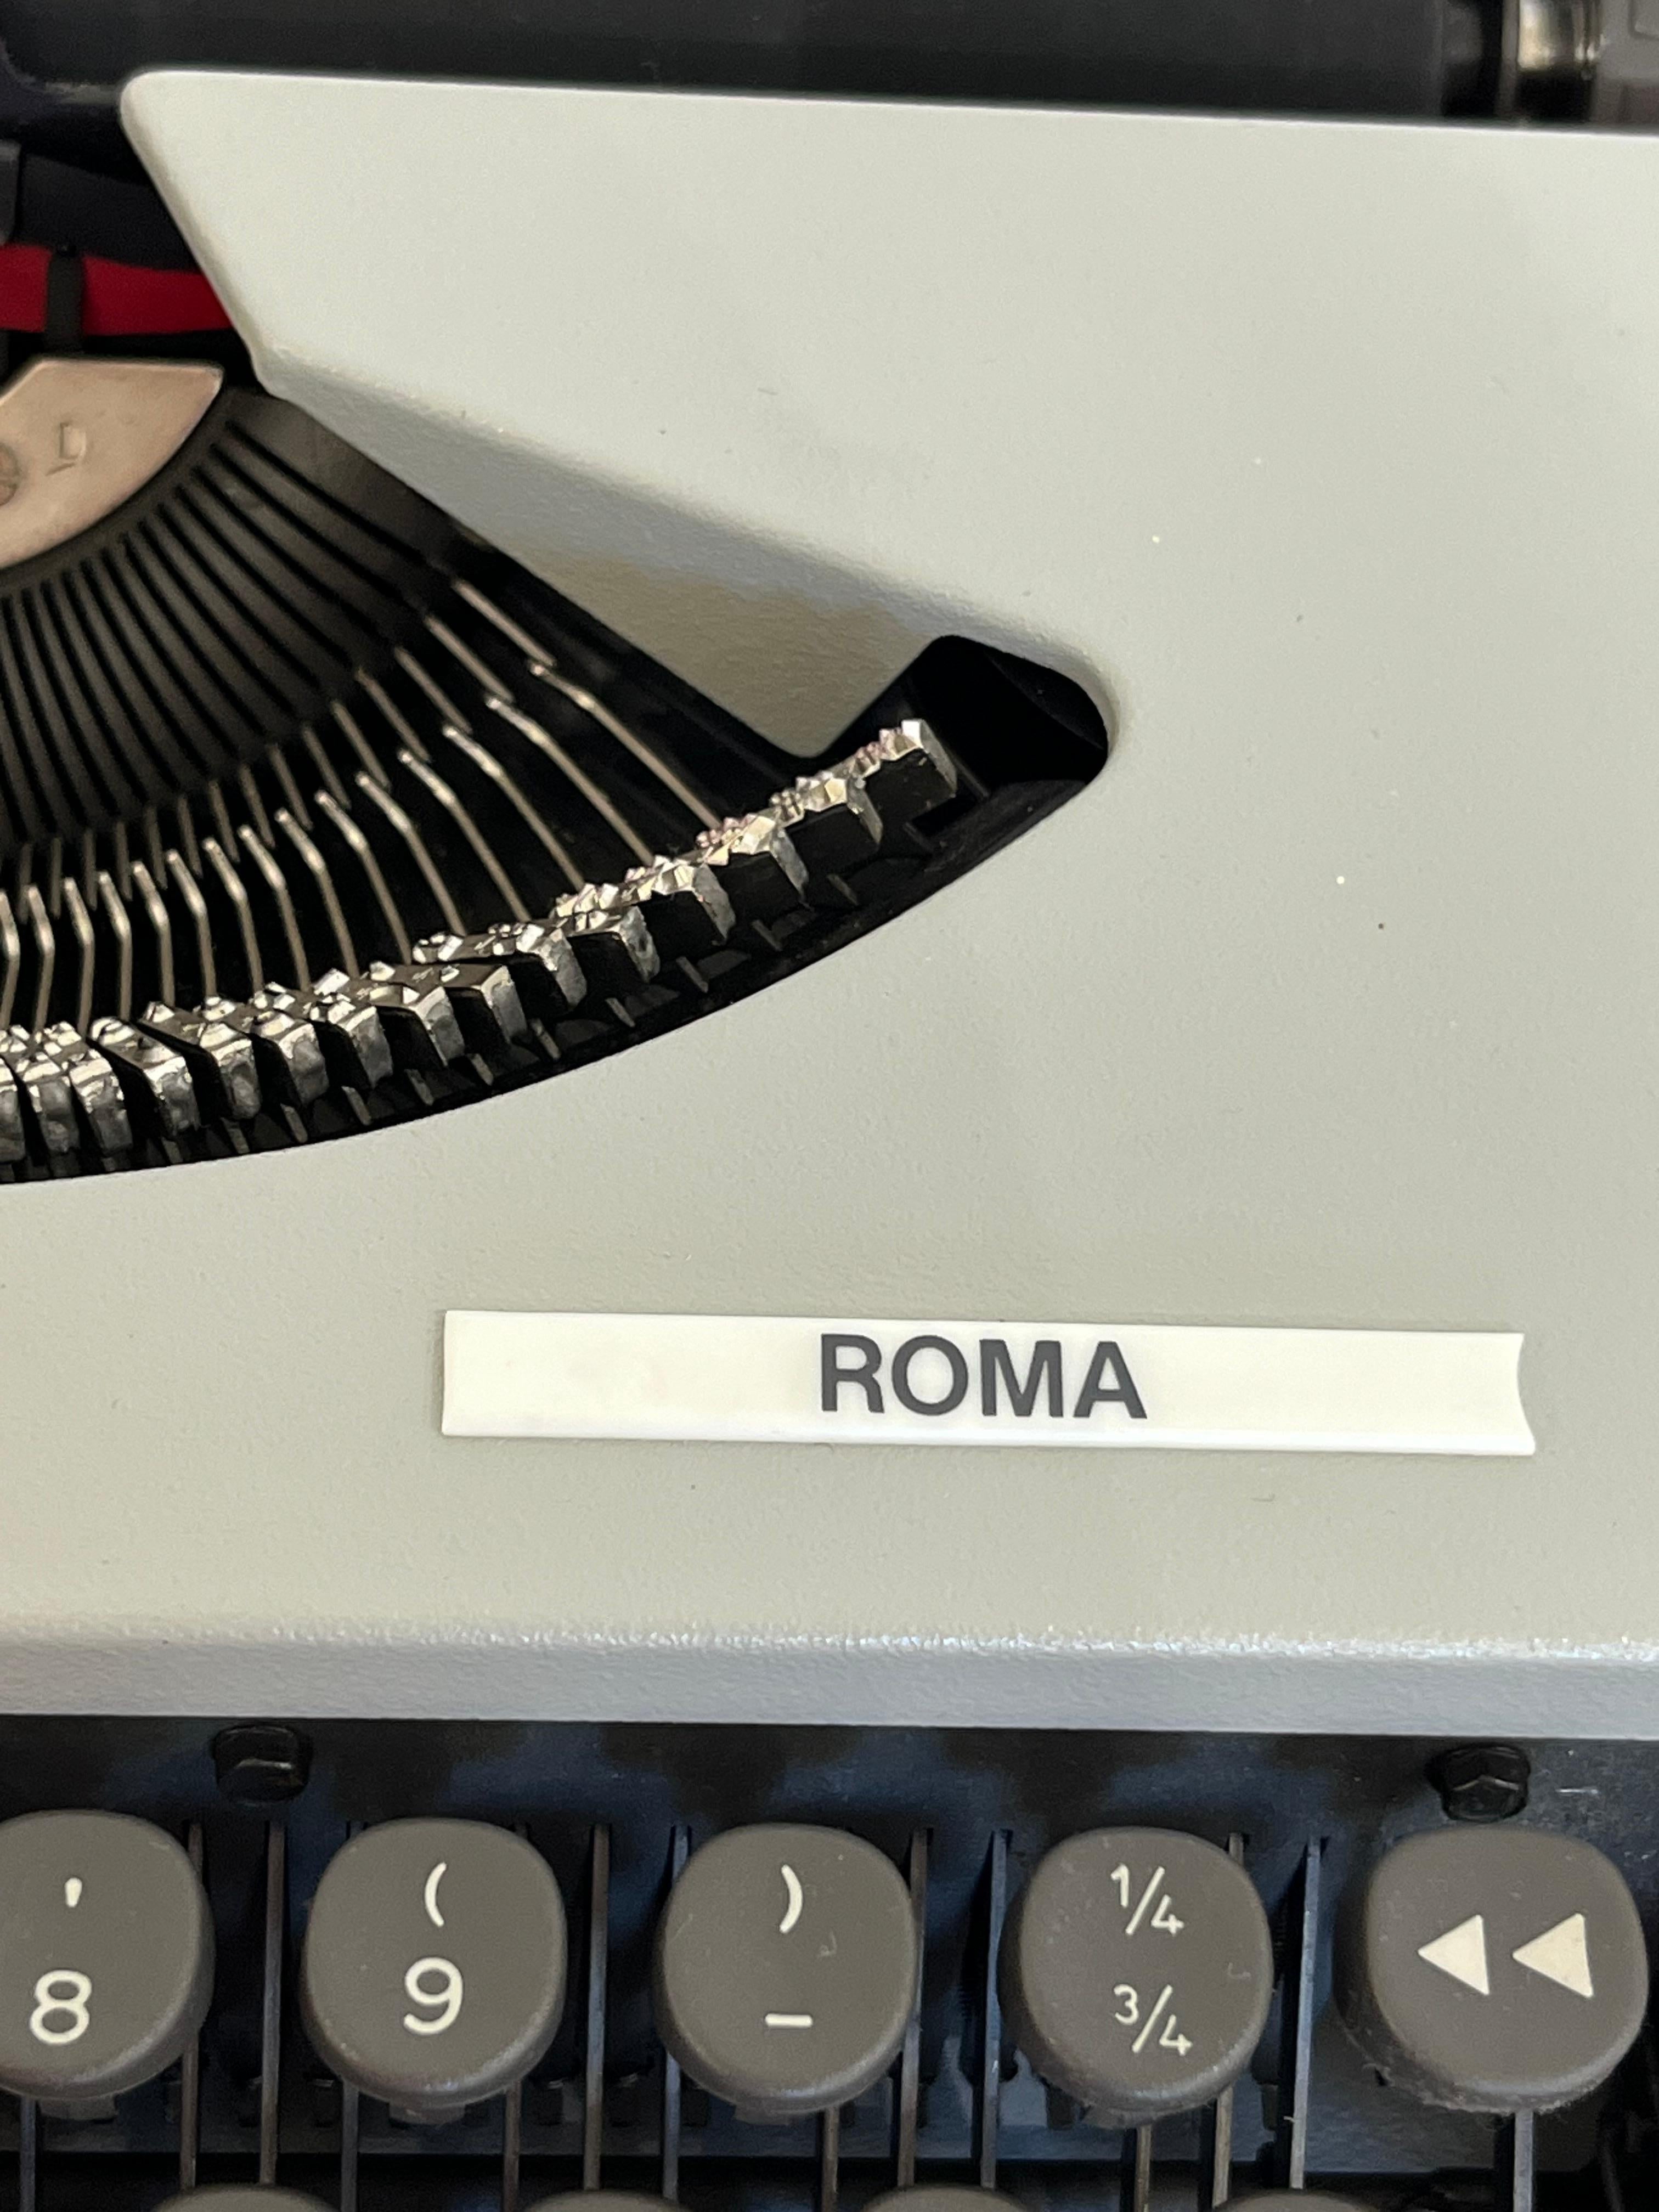 Brazilian Vintage Olivetti Portable Typewriter Model Roma 1984 For Sale